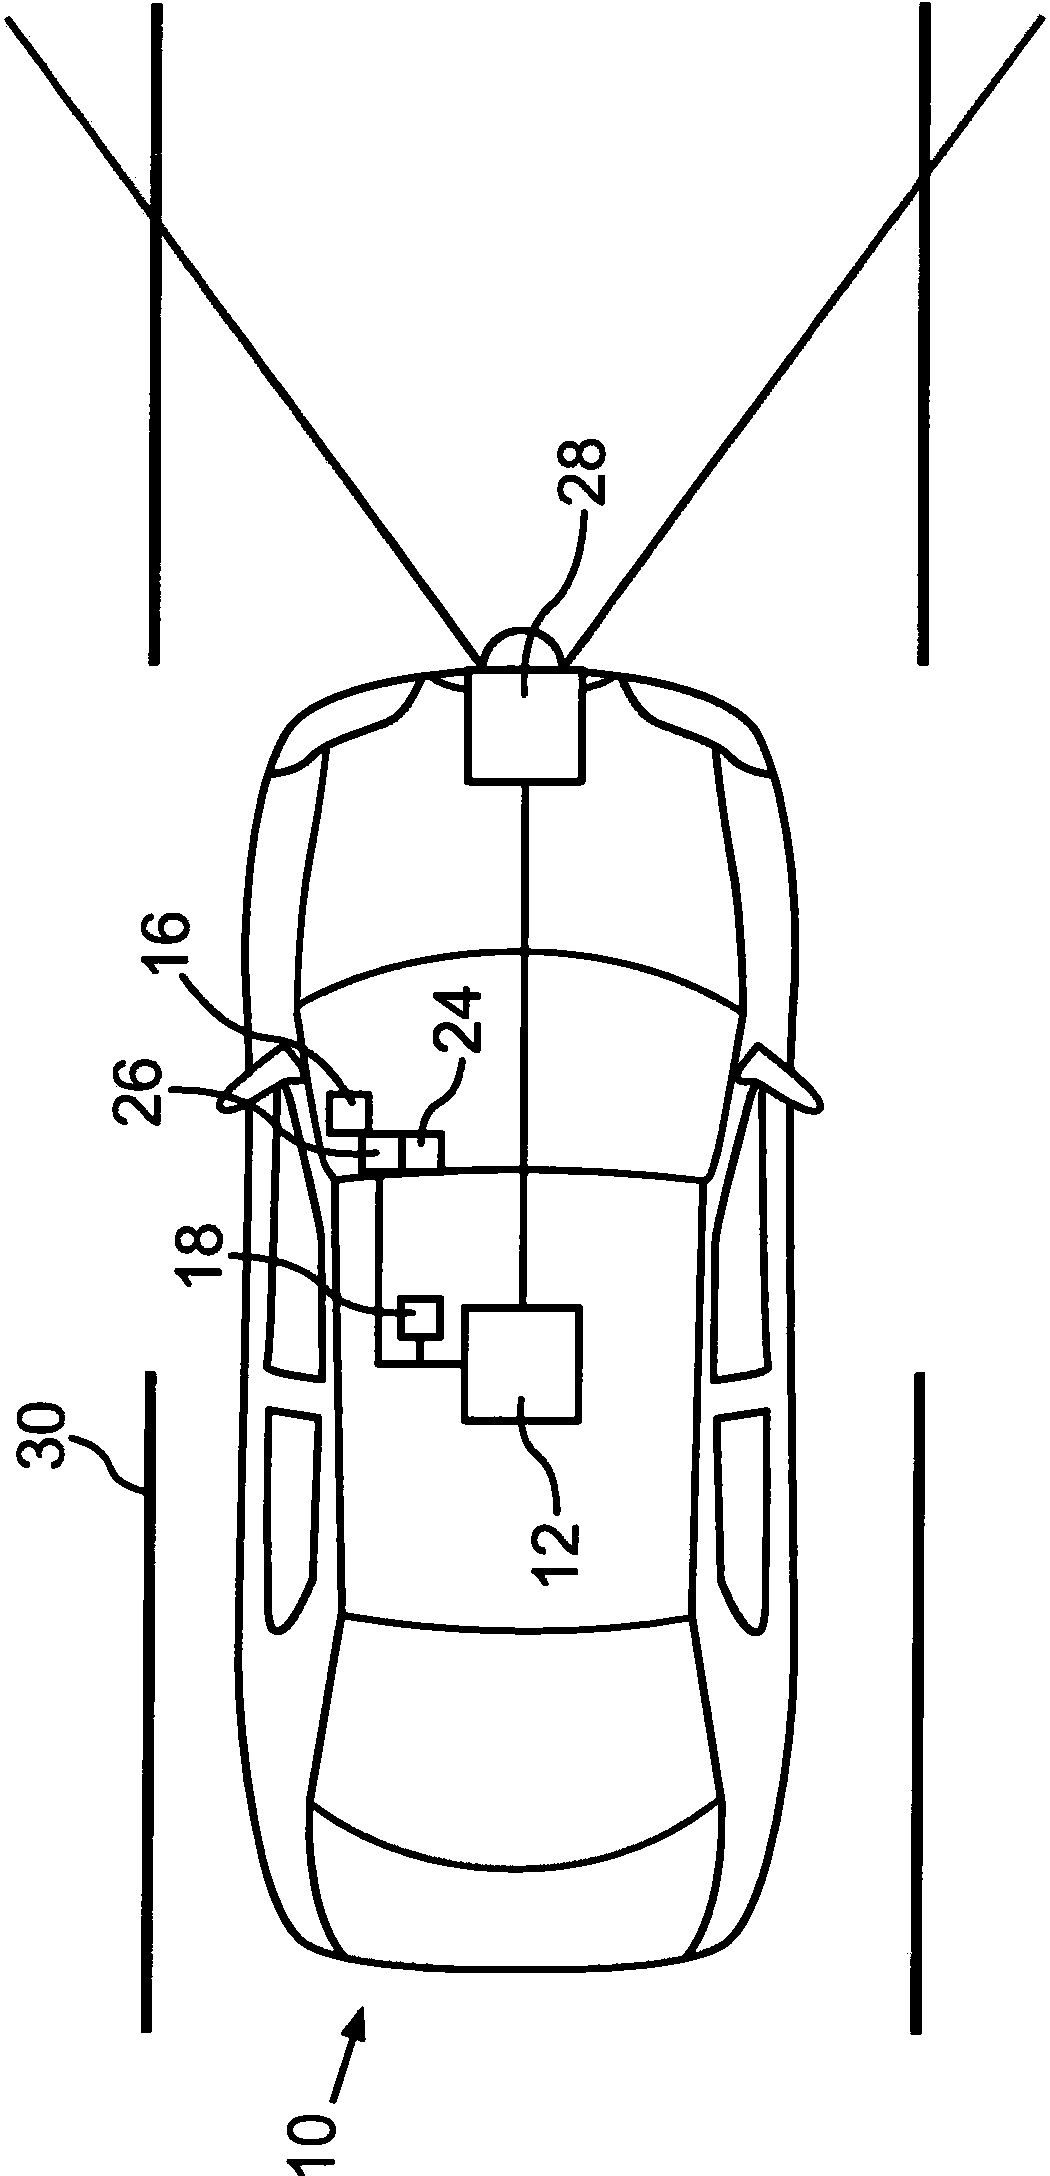 Method for controlling a reversible belt tensioner of safety belt in motor vehicle